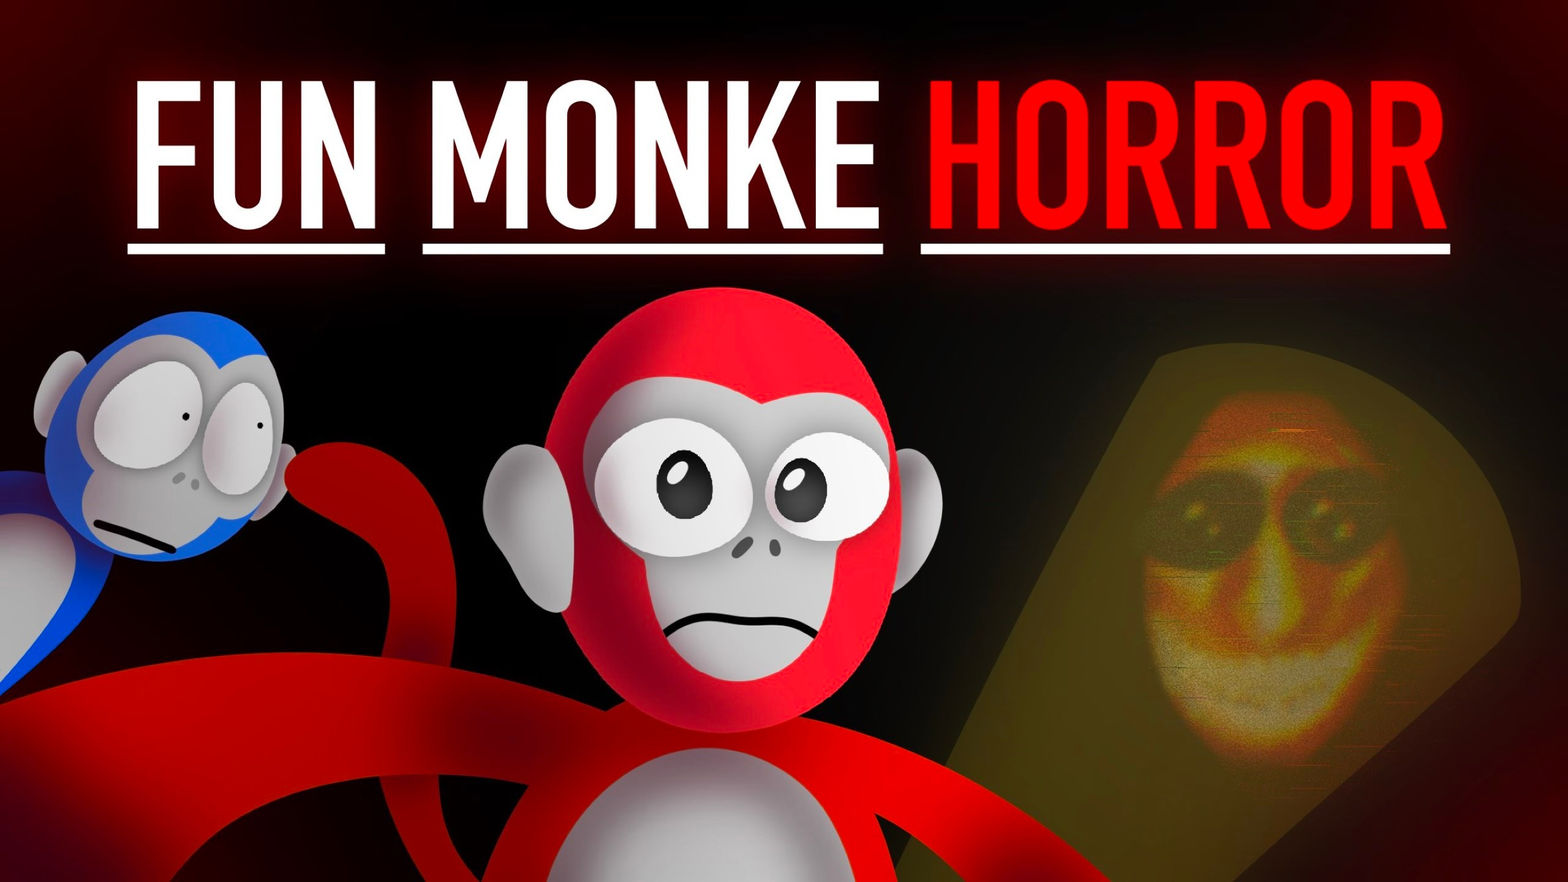 Fun Monke Horror